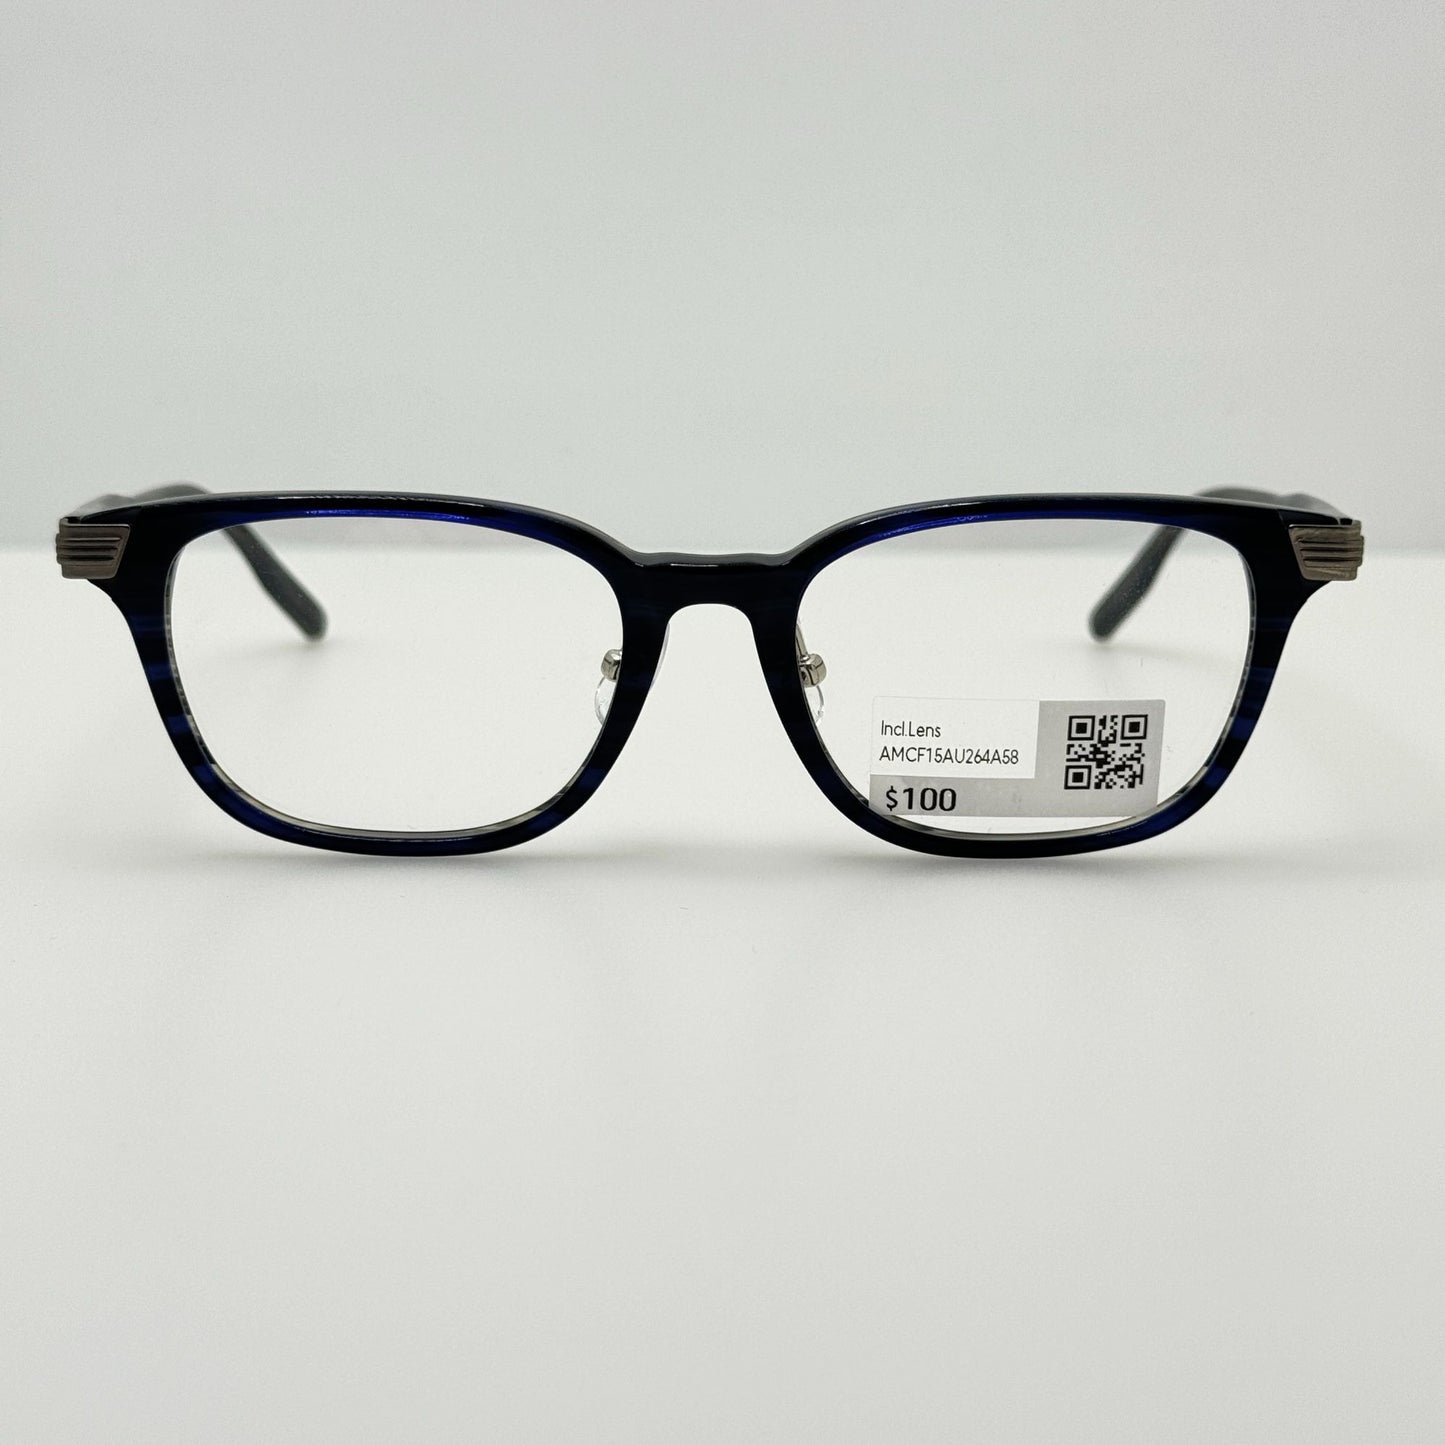 Jins Eyeglasses Eye Glasses Frames MCF-15A-U264A 58 51-18-150 37